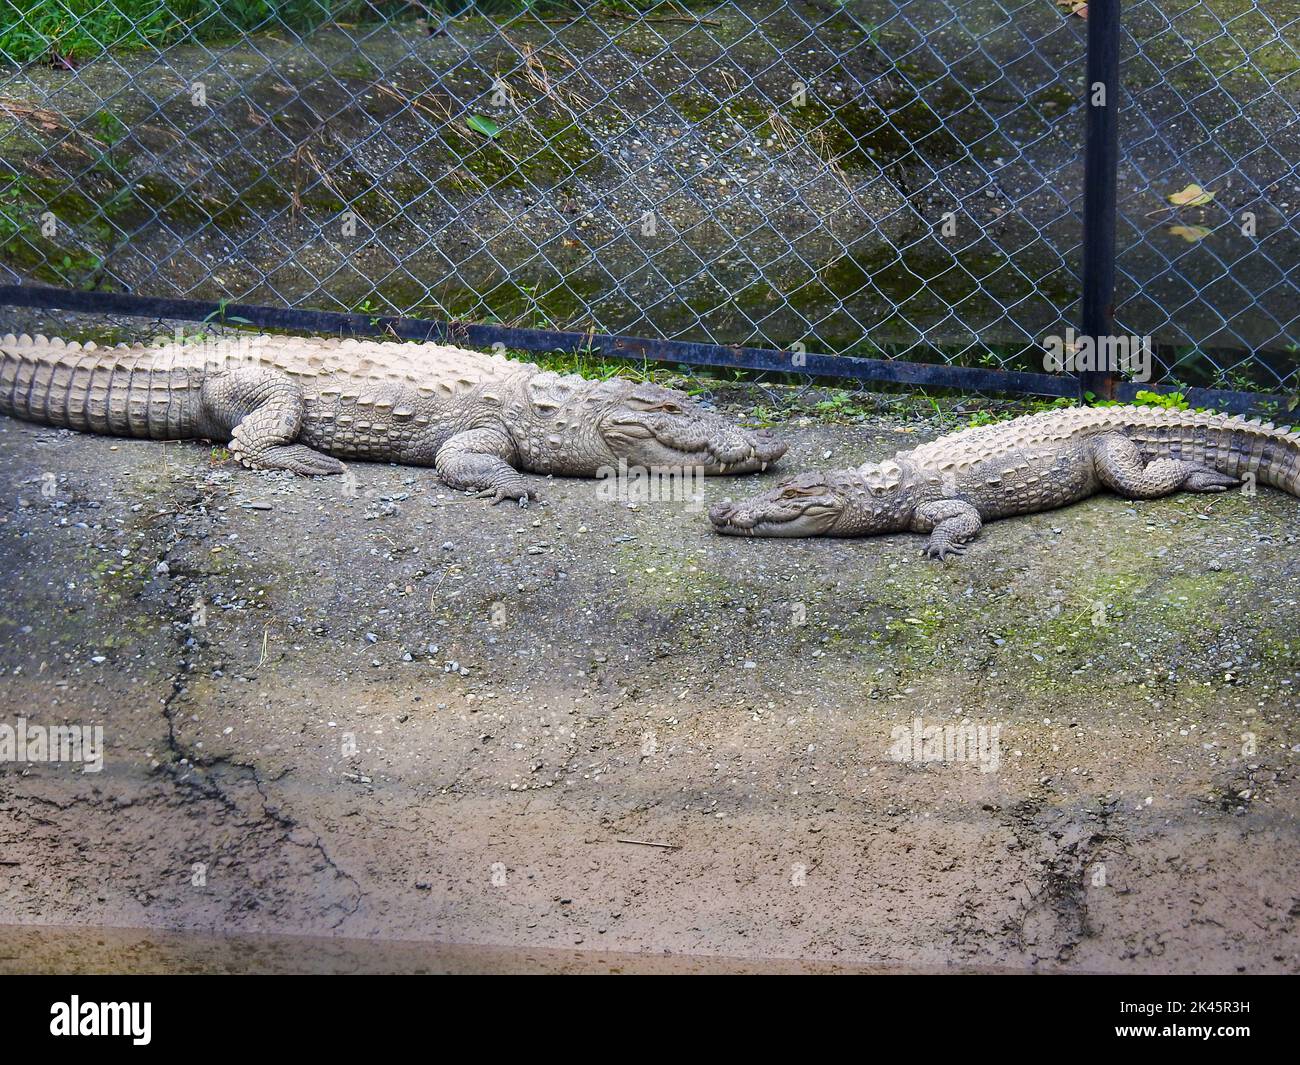 August 18th 2018, dehradun City Uttarakhand India. Alligators in captivity at Dehradun Malsi Zoo. Stock Photo